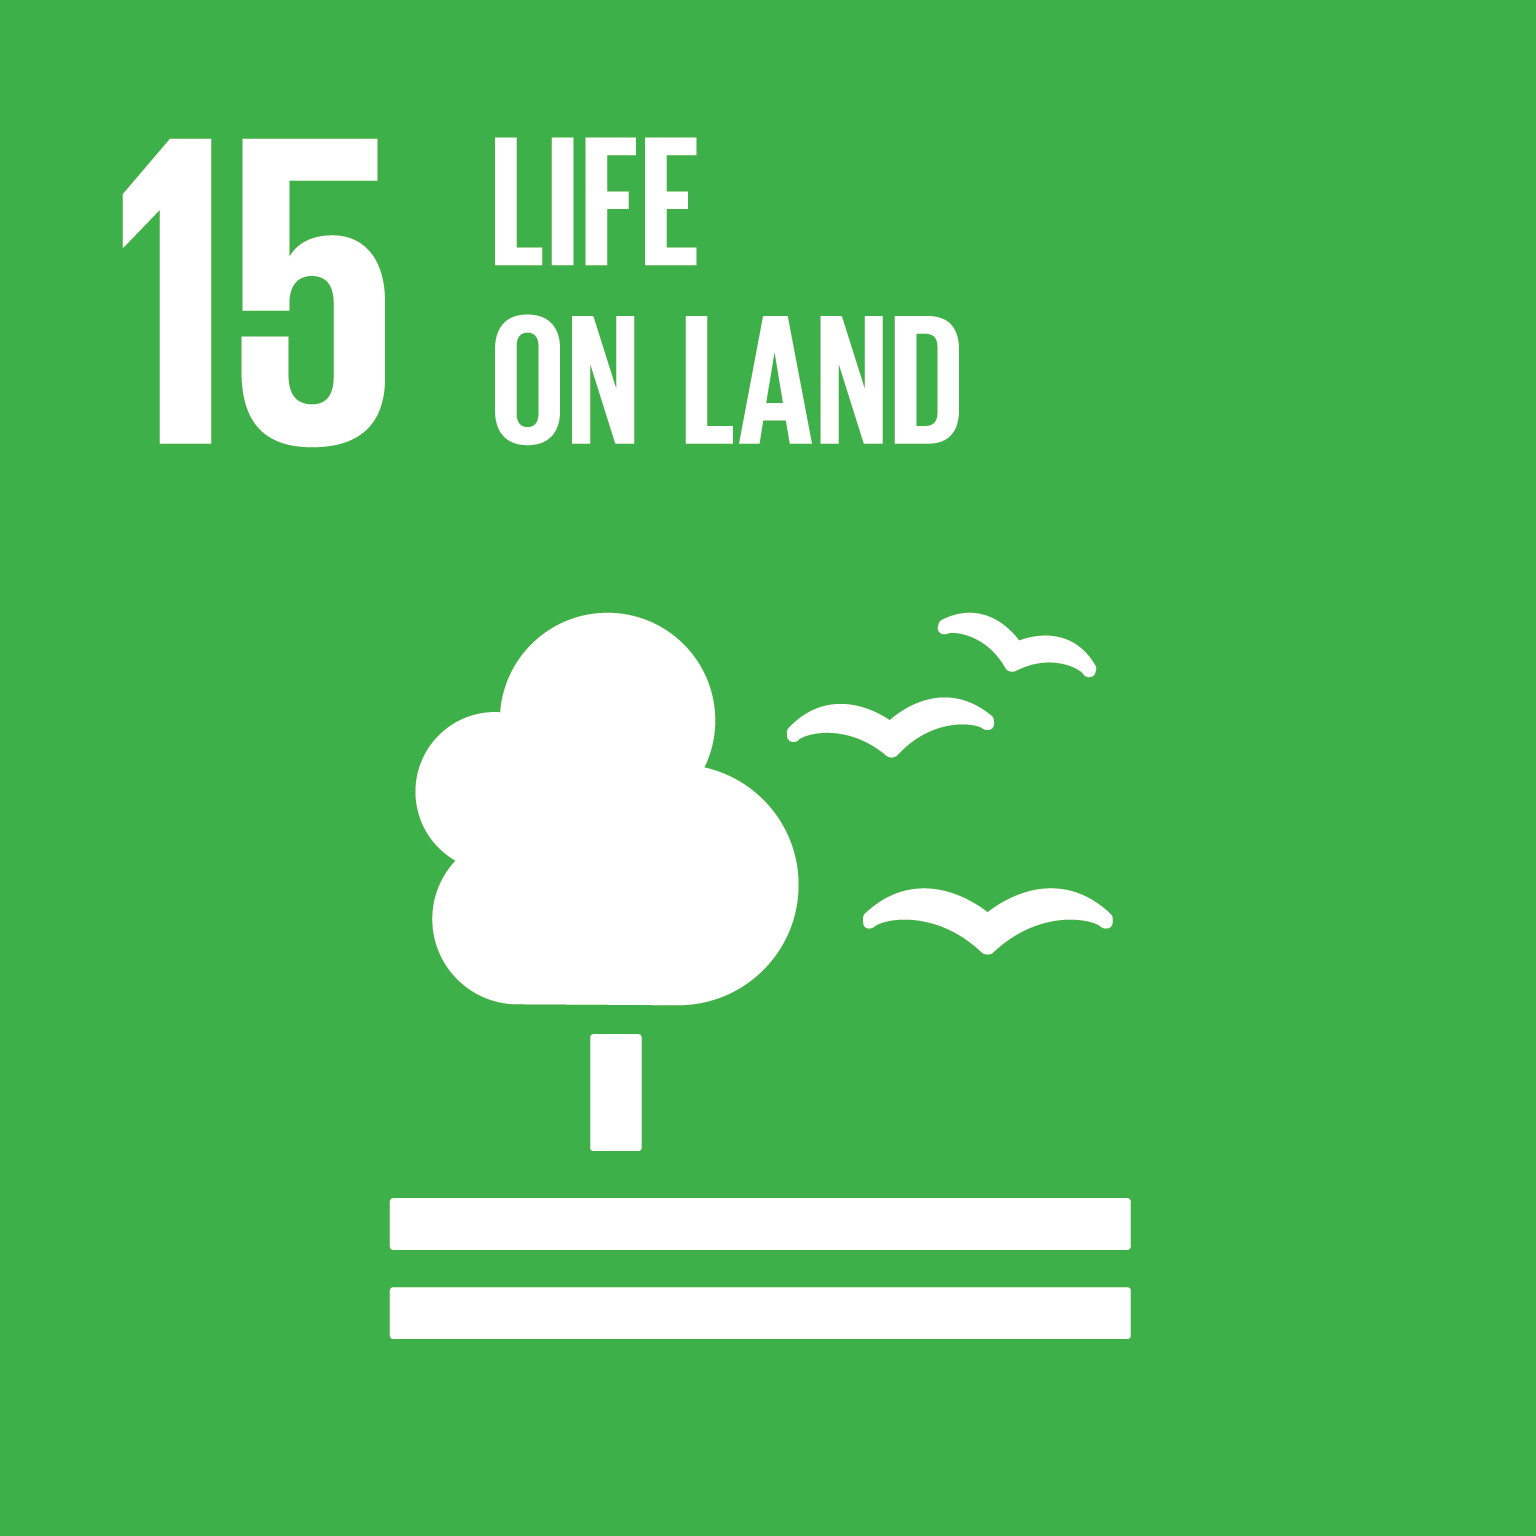 sustainable development goal 15 icon life on land